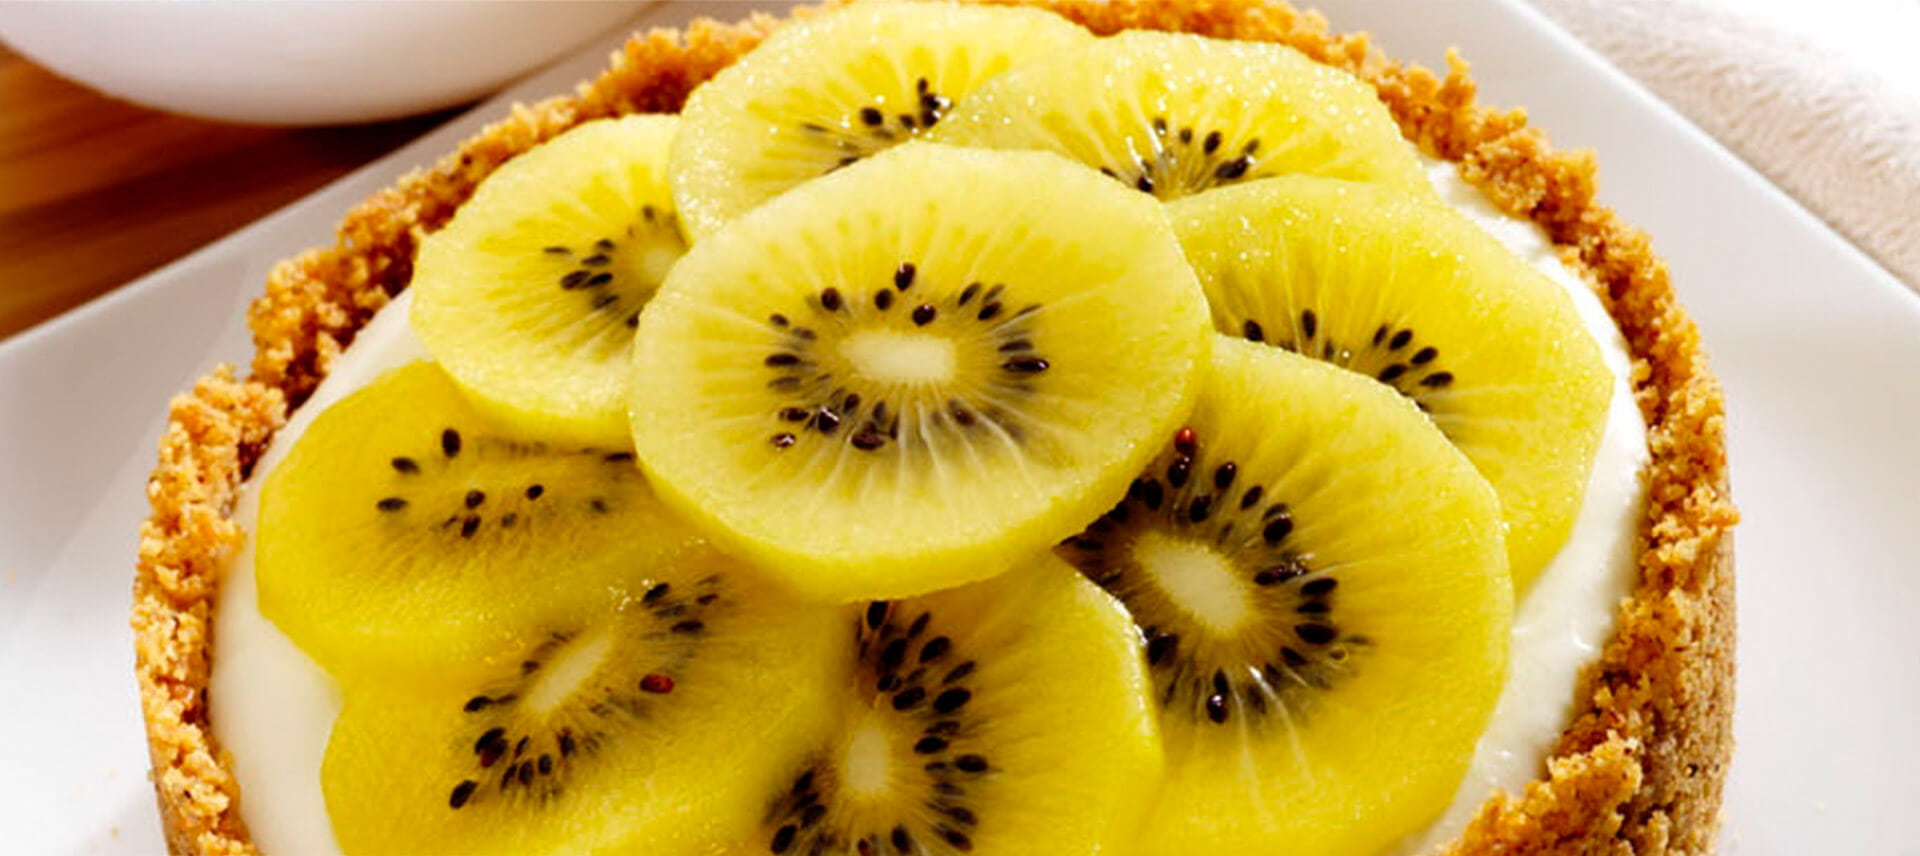 kiwifruit health benefits